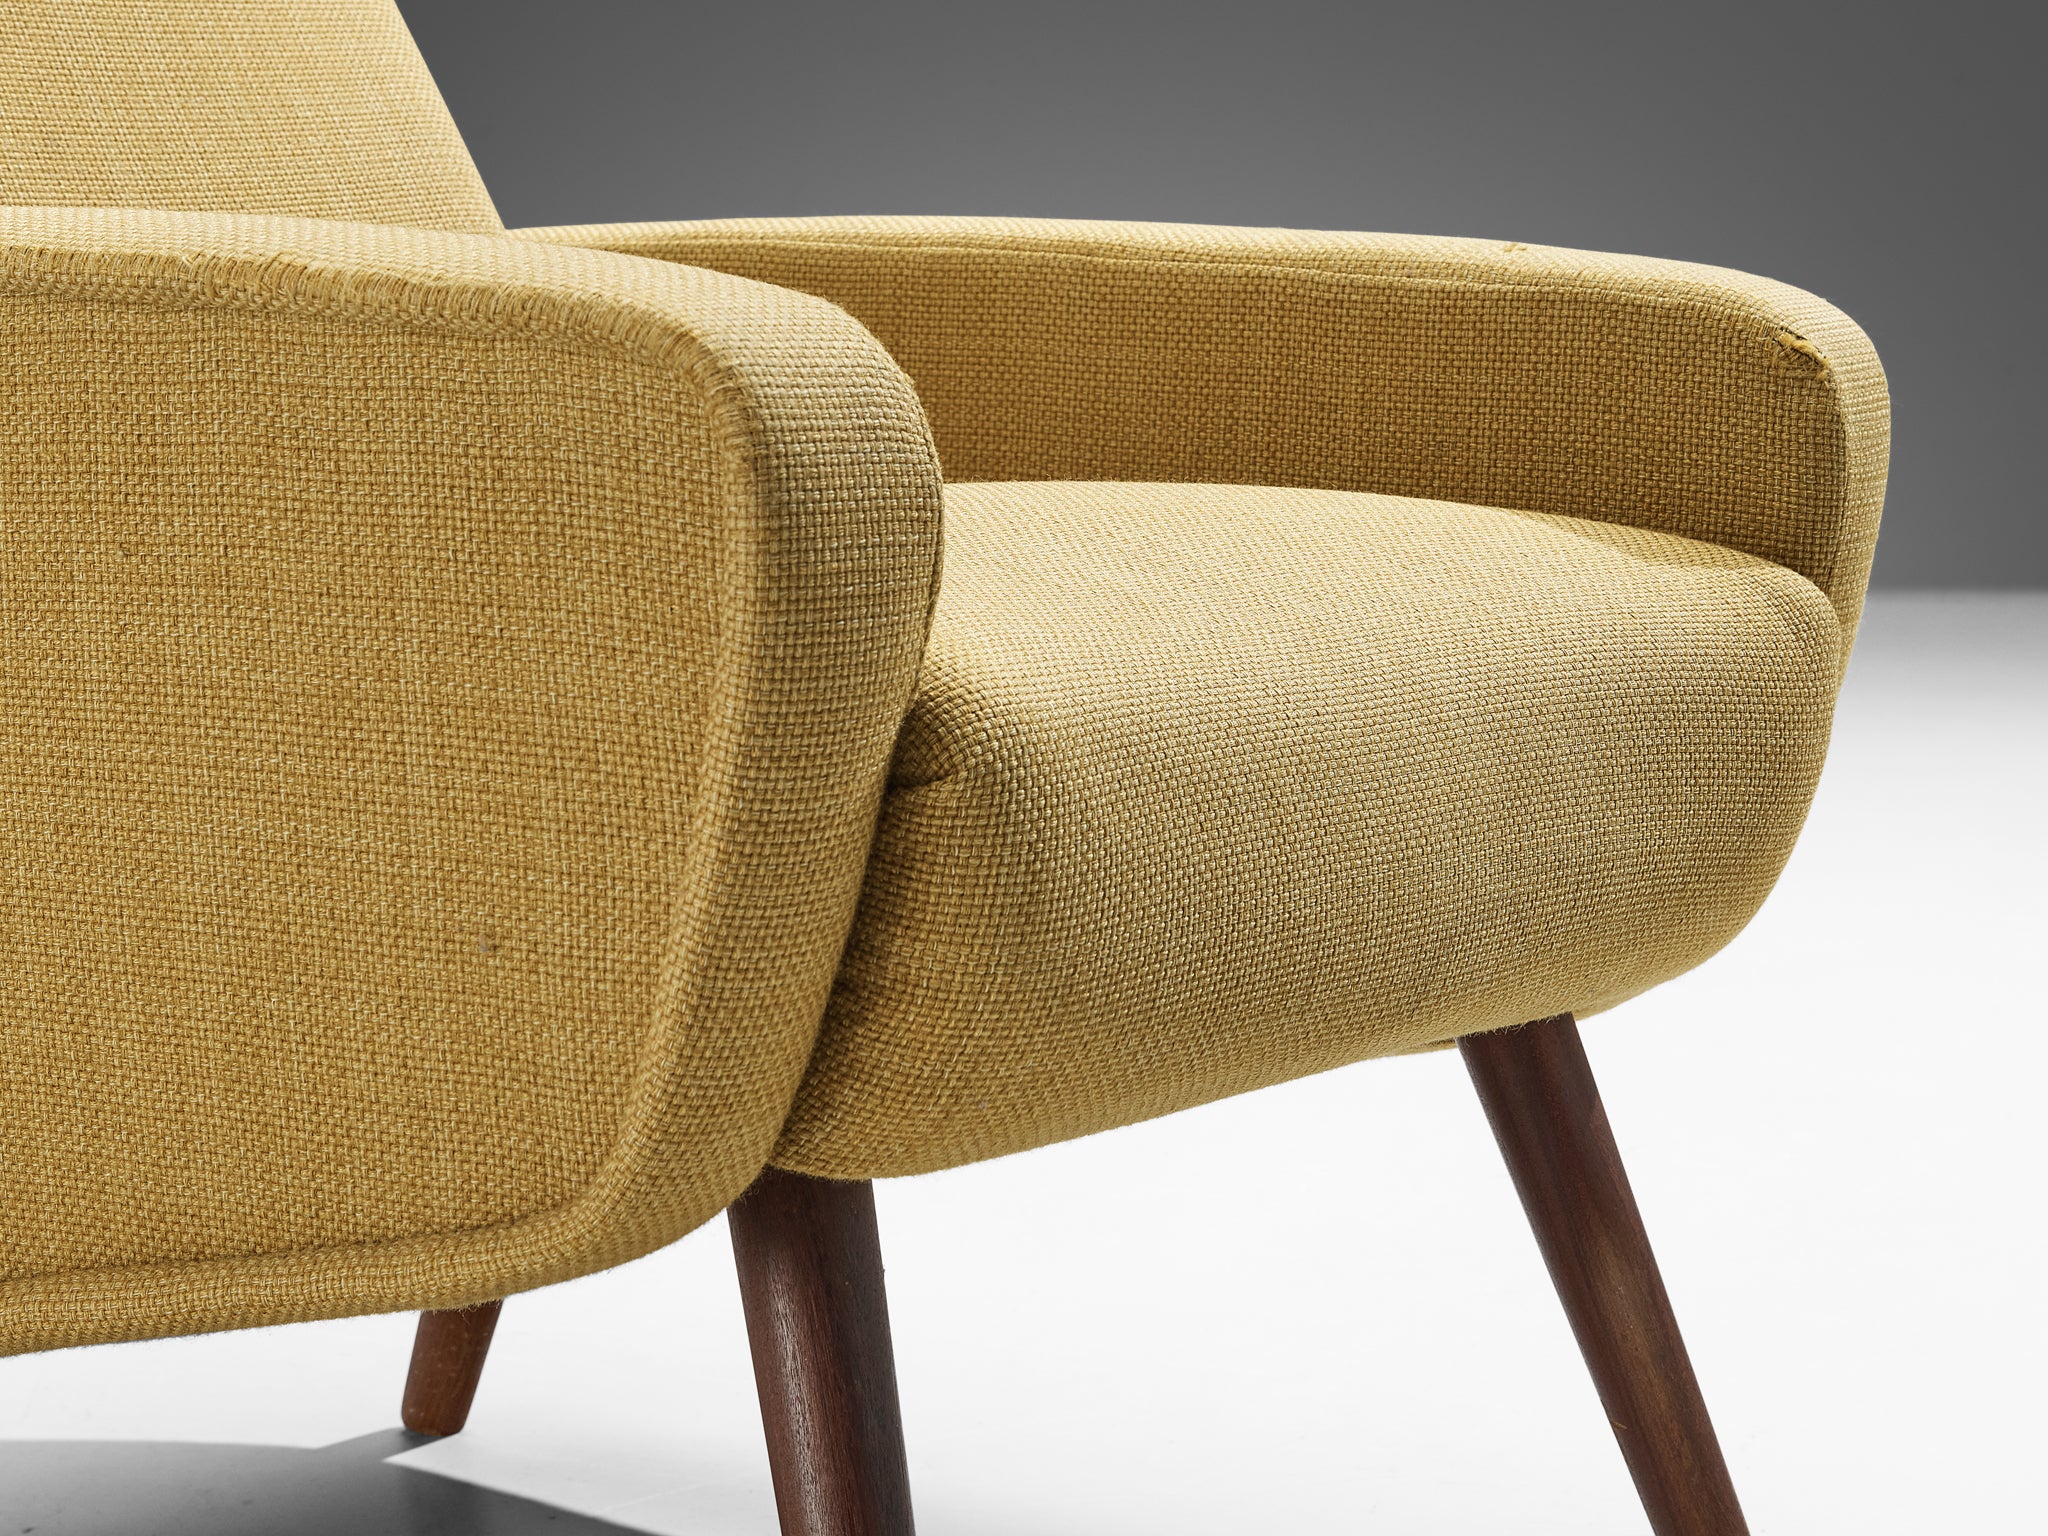 Italian Midcentury Lounge Chair in Mustard Yellow Upholstery